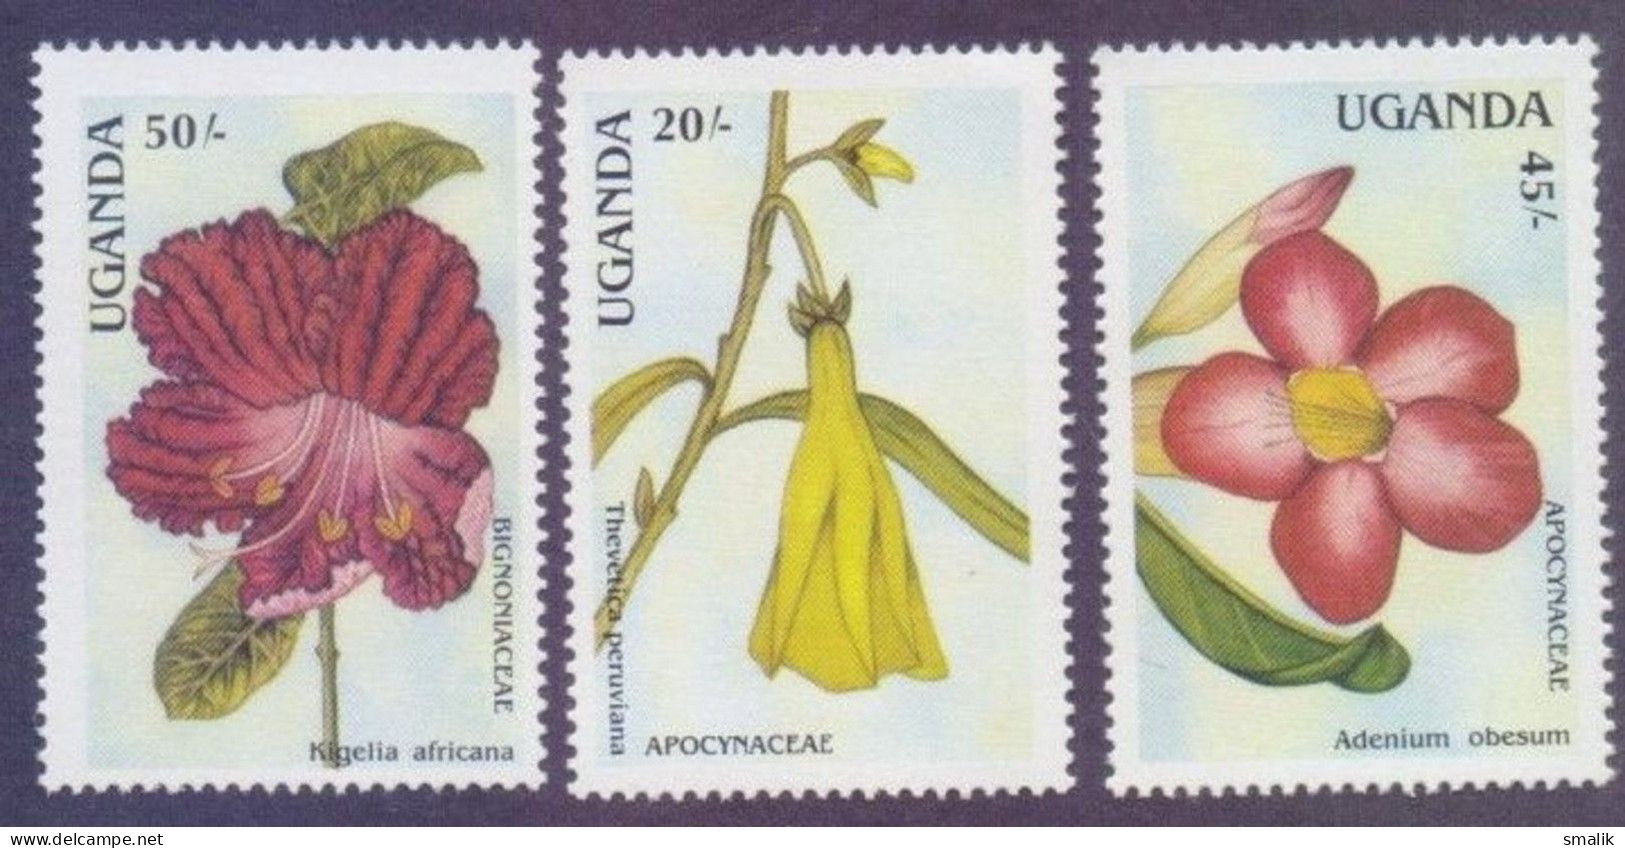 UGANDA 1988 - Flowers, 3 Stamps MNH - Uganda (1962-...)